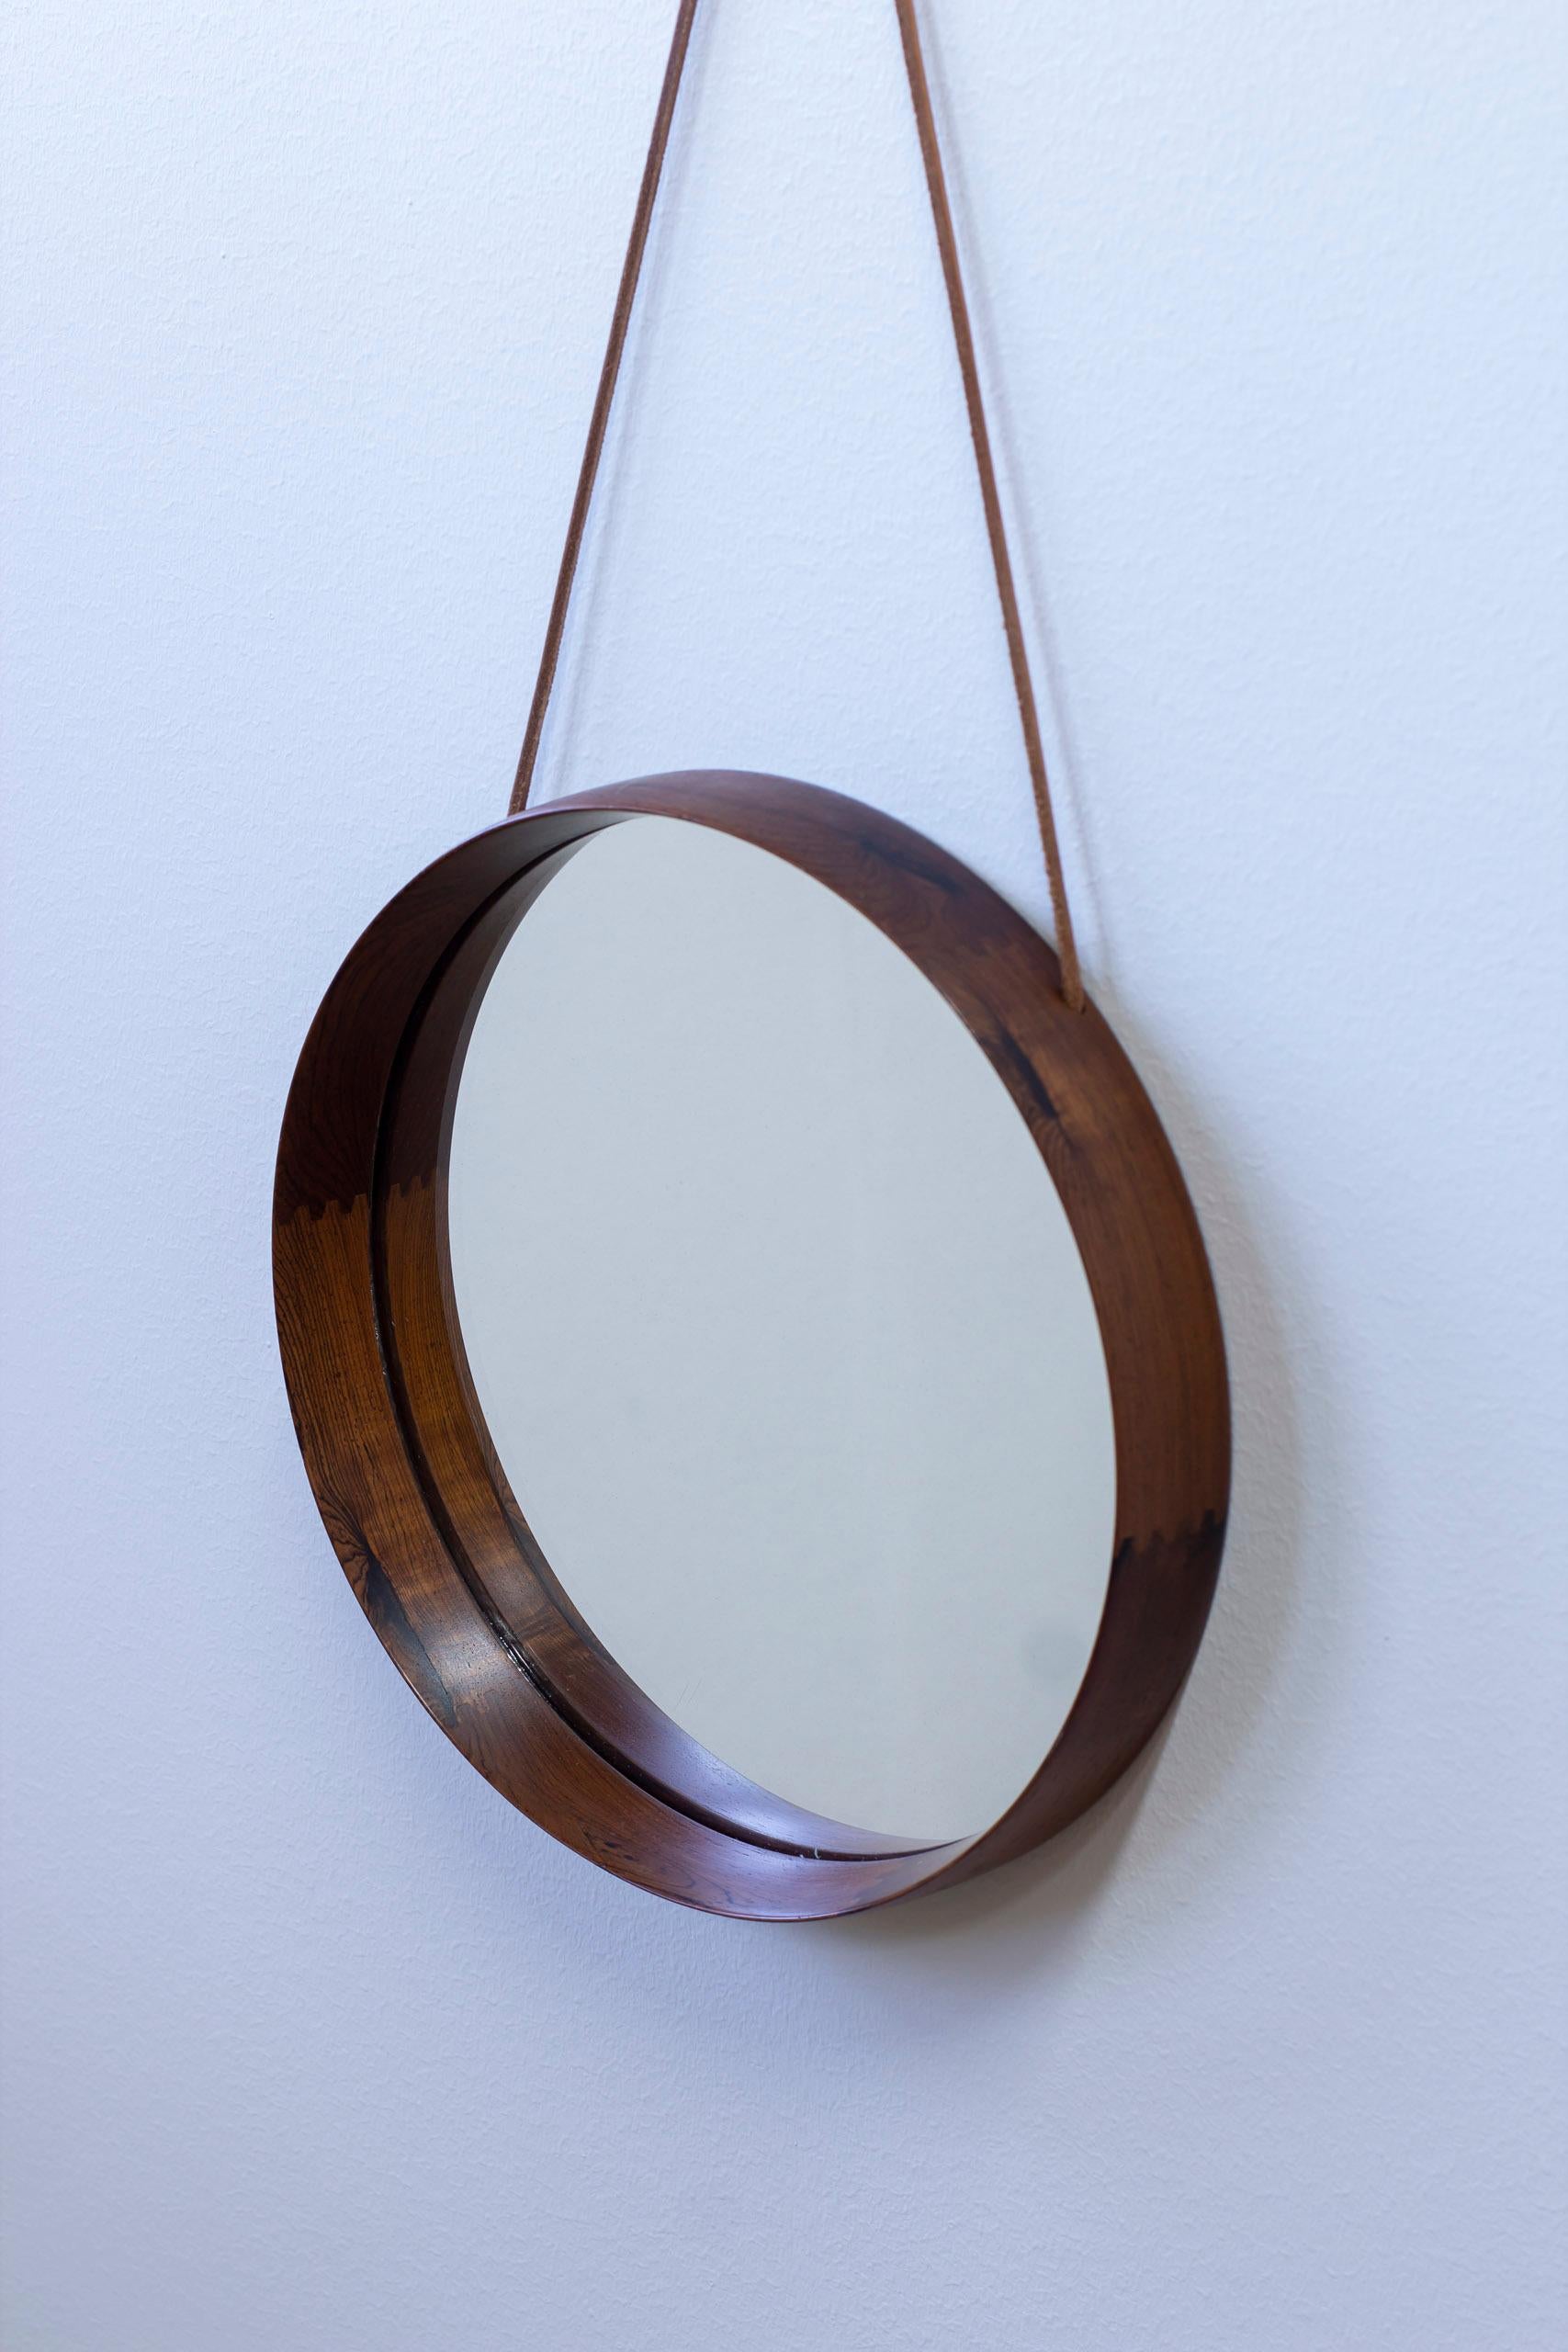 Palisander wall mirror 415 by Uno & Östen Kristiansson for Luxus, Sweden In Good Condition For Sale In Hägersten, SE